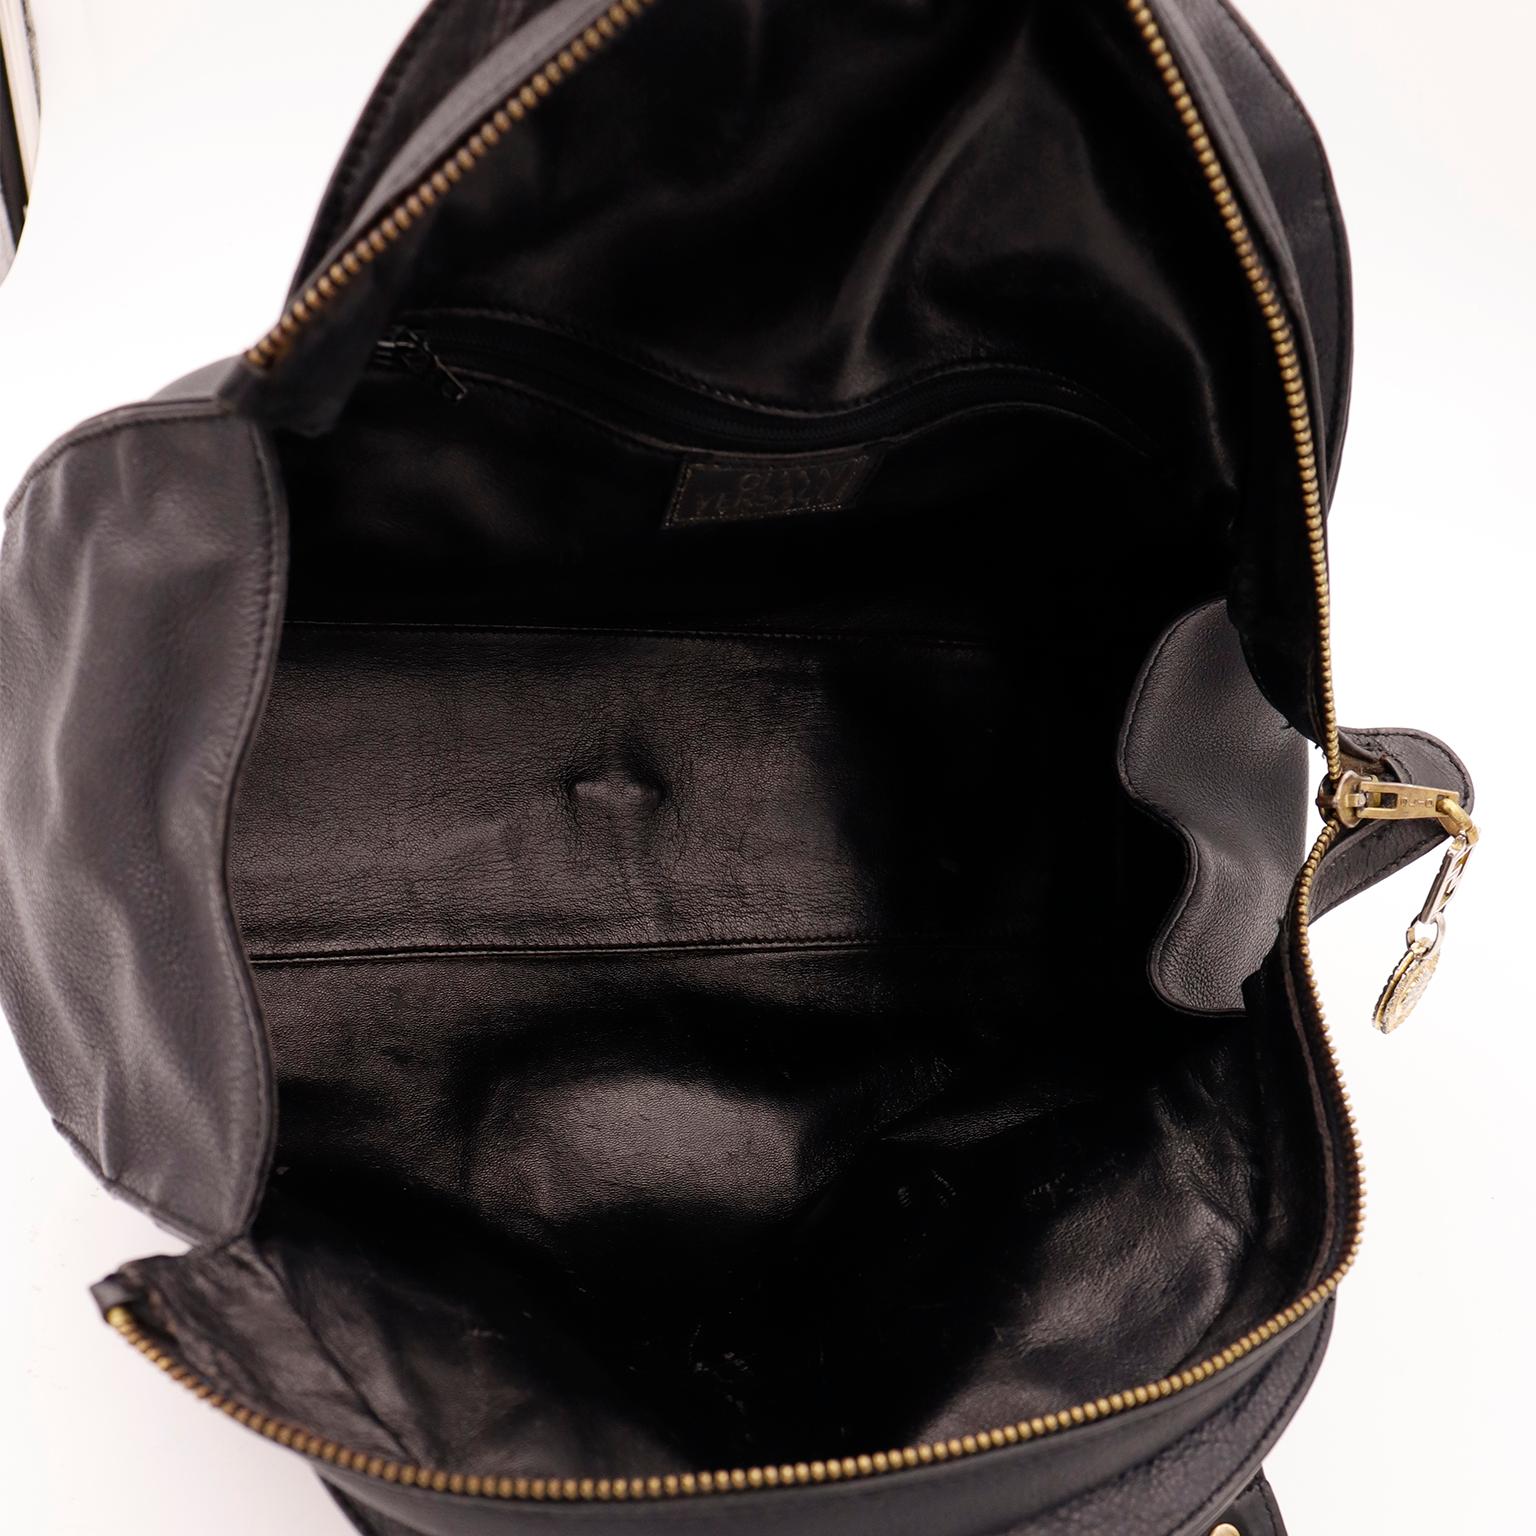 Gianni Versace 1992 Medusa Bondage Black Leather Top Handle Satchel Handbag 11